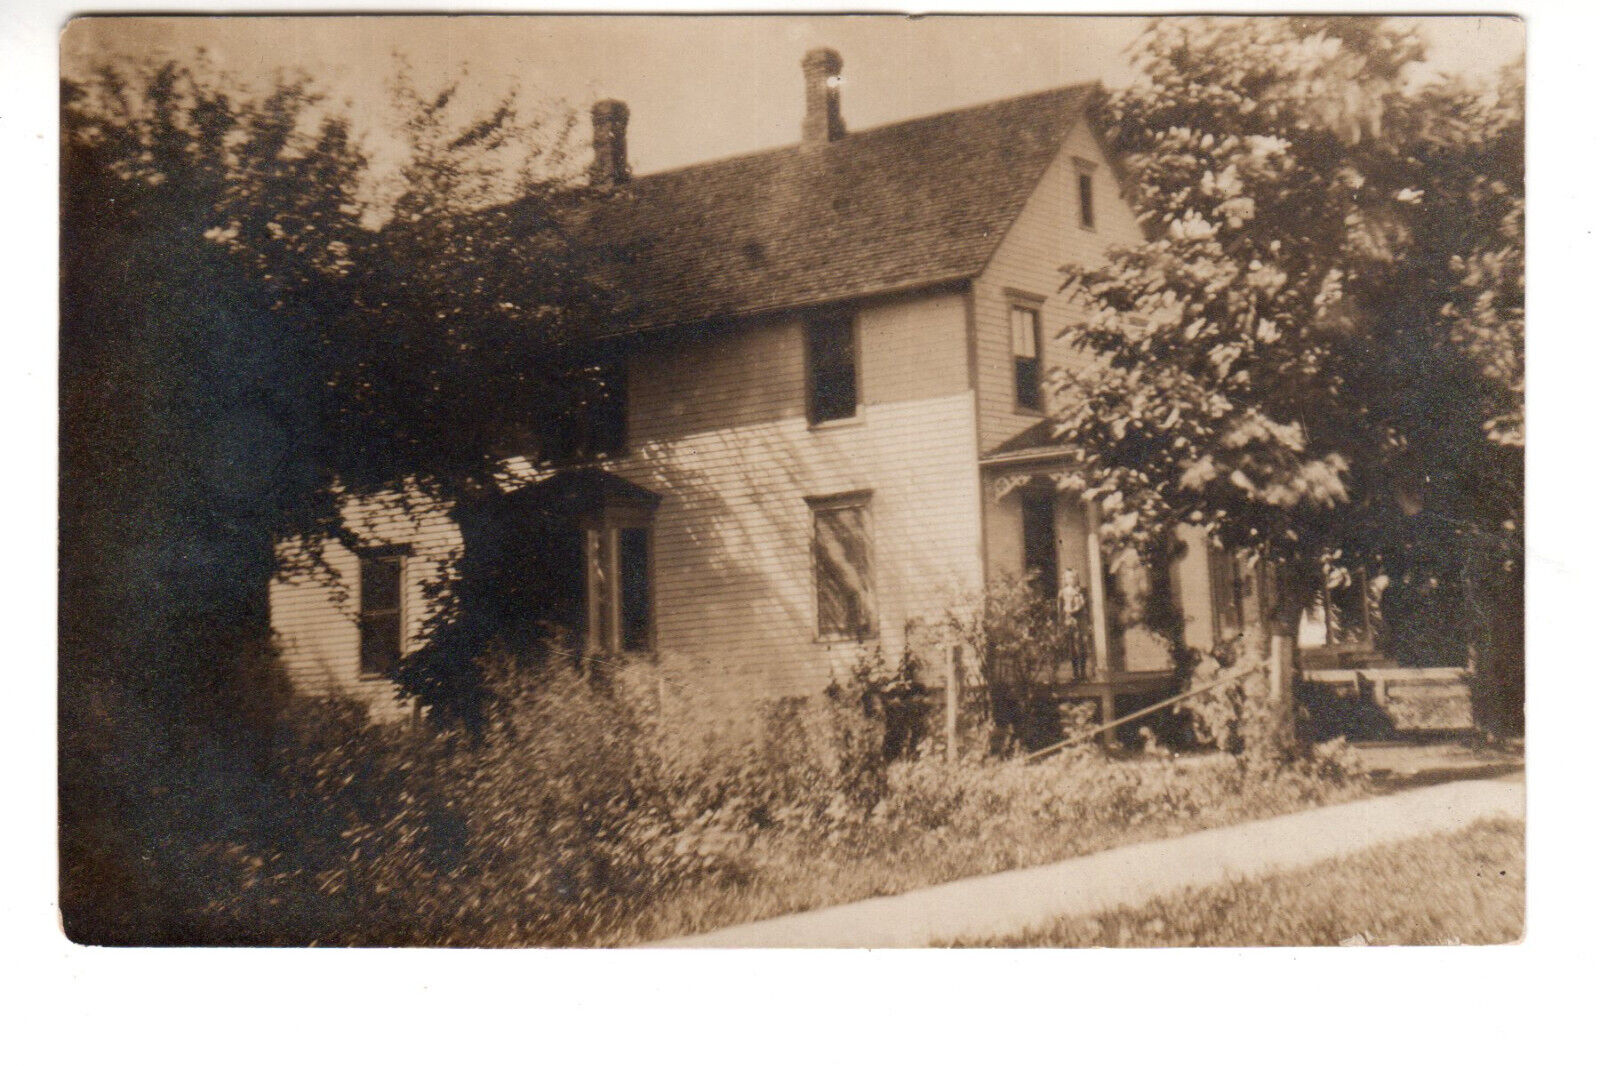 RPPC Postcard: 2-story Clapboard house; postmark Elmhurst, IL (Illinois) 1909